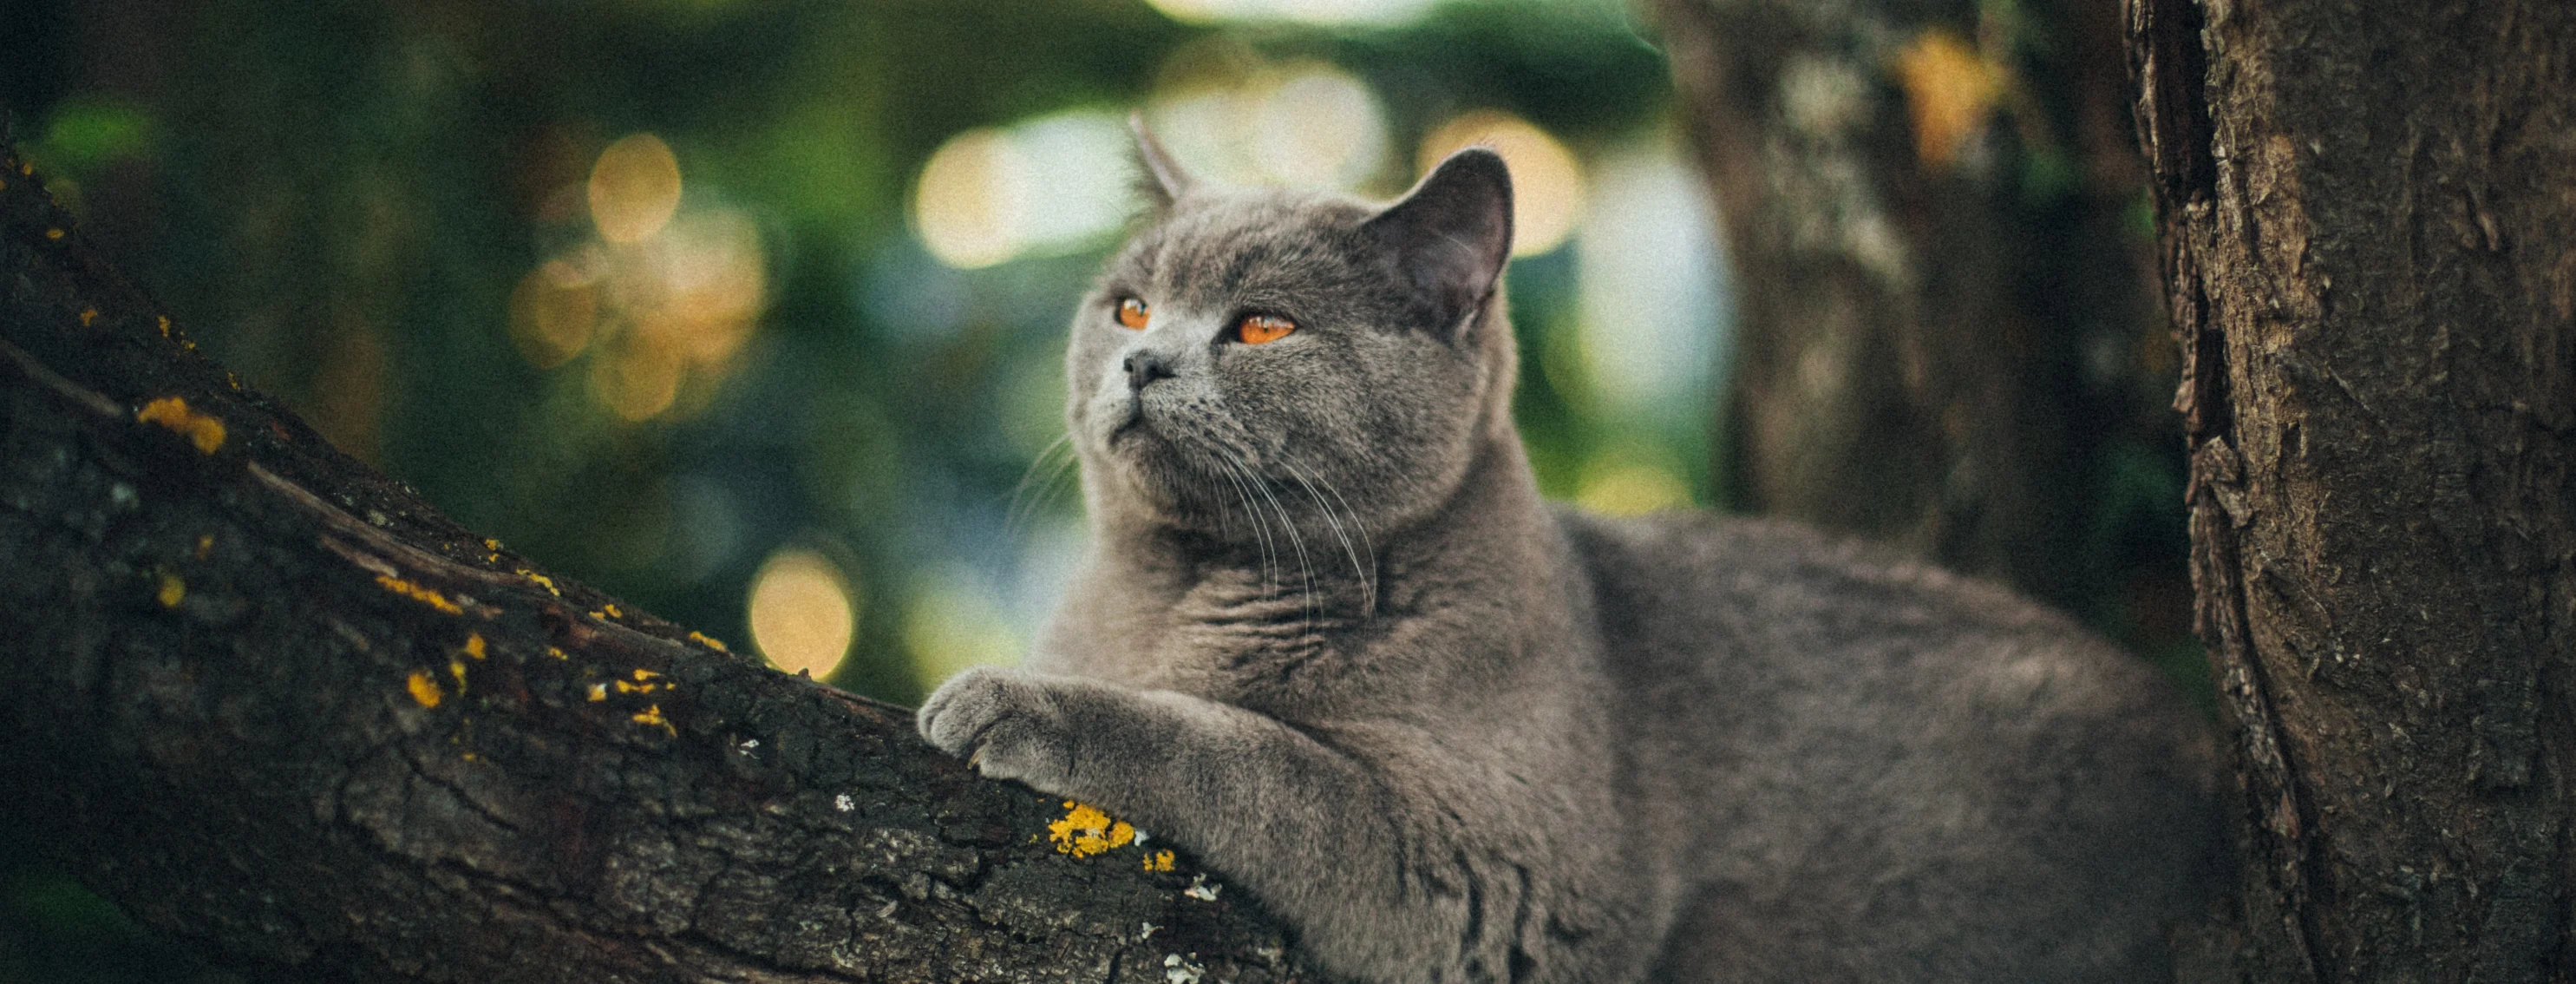 Cat sitting in tree